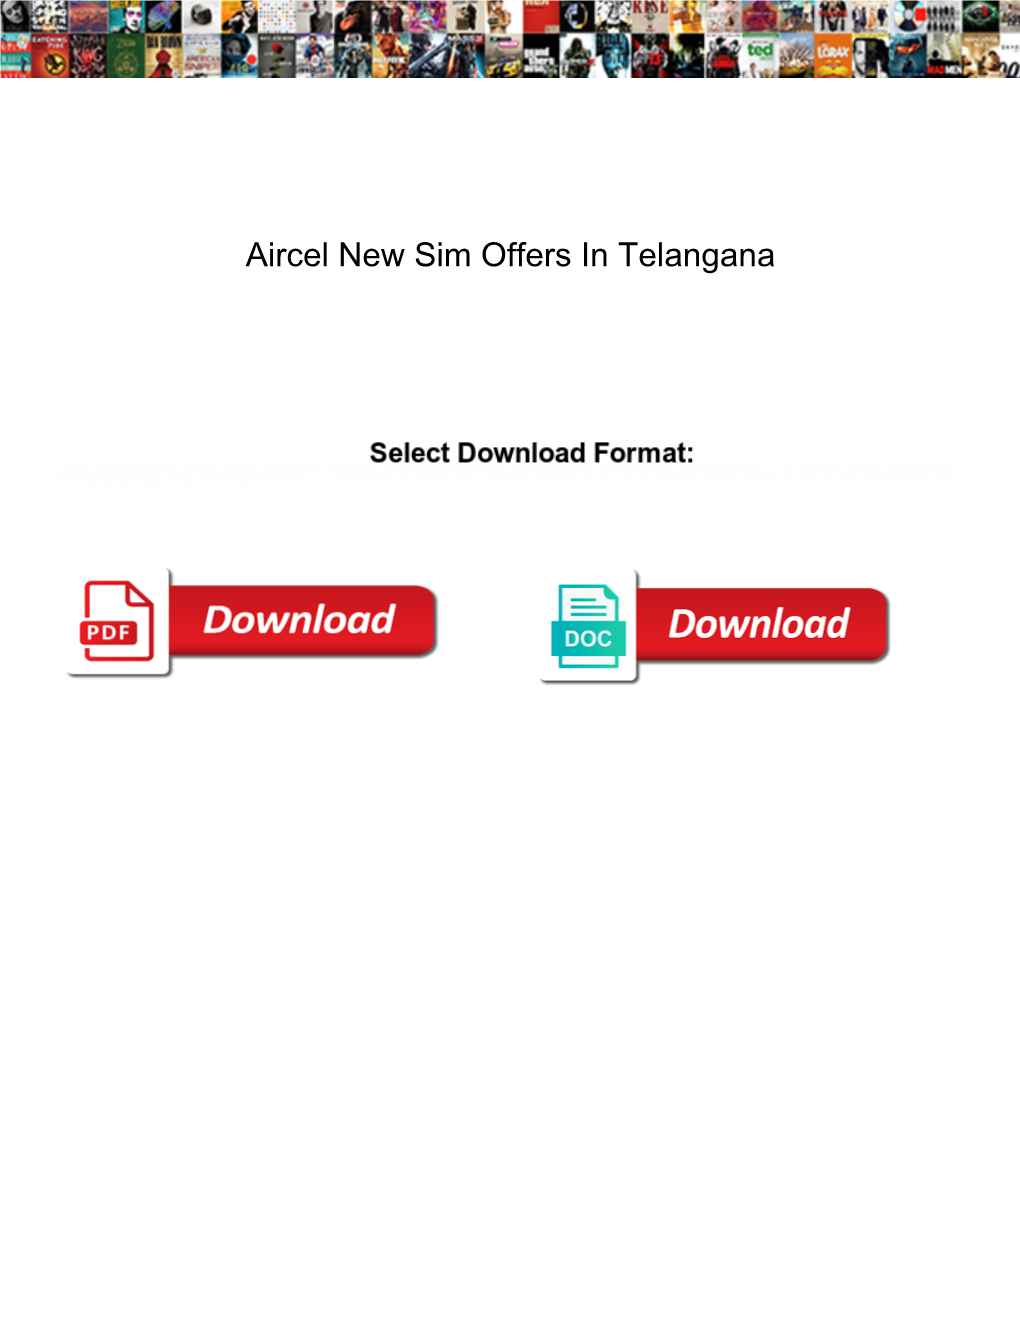 Aircel New Sim Offers in Telangana